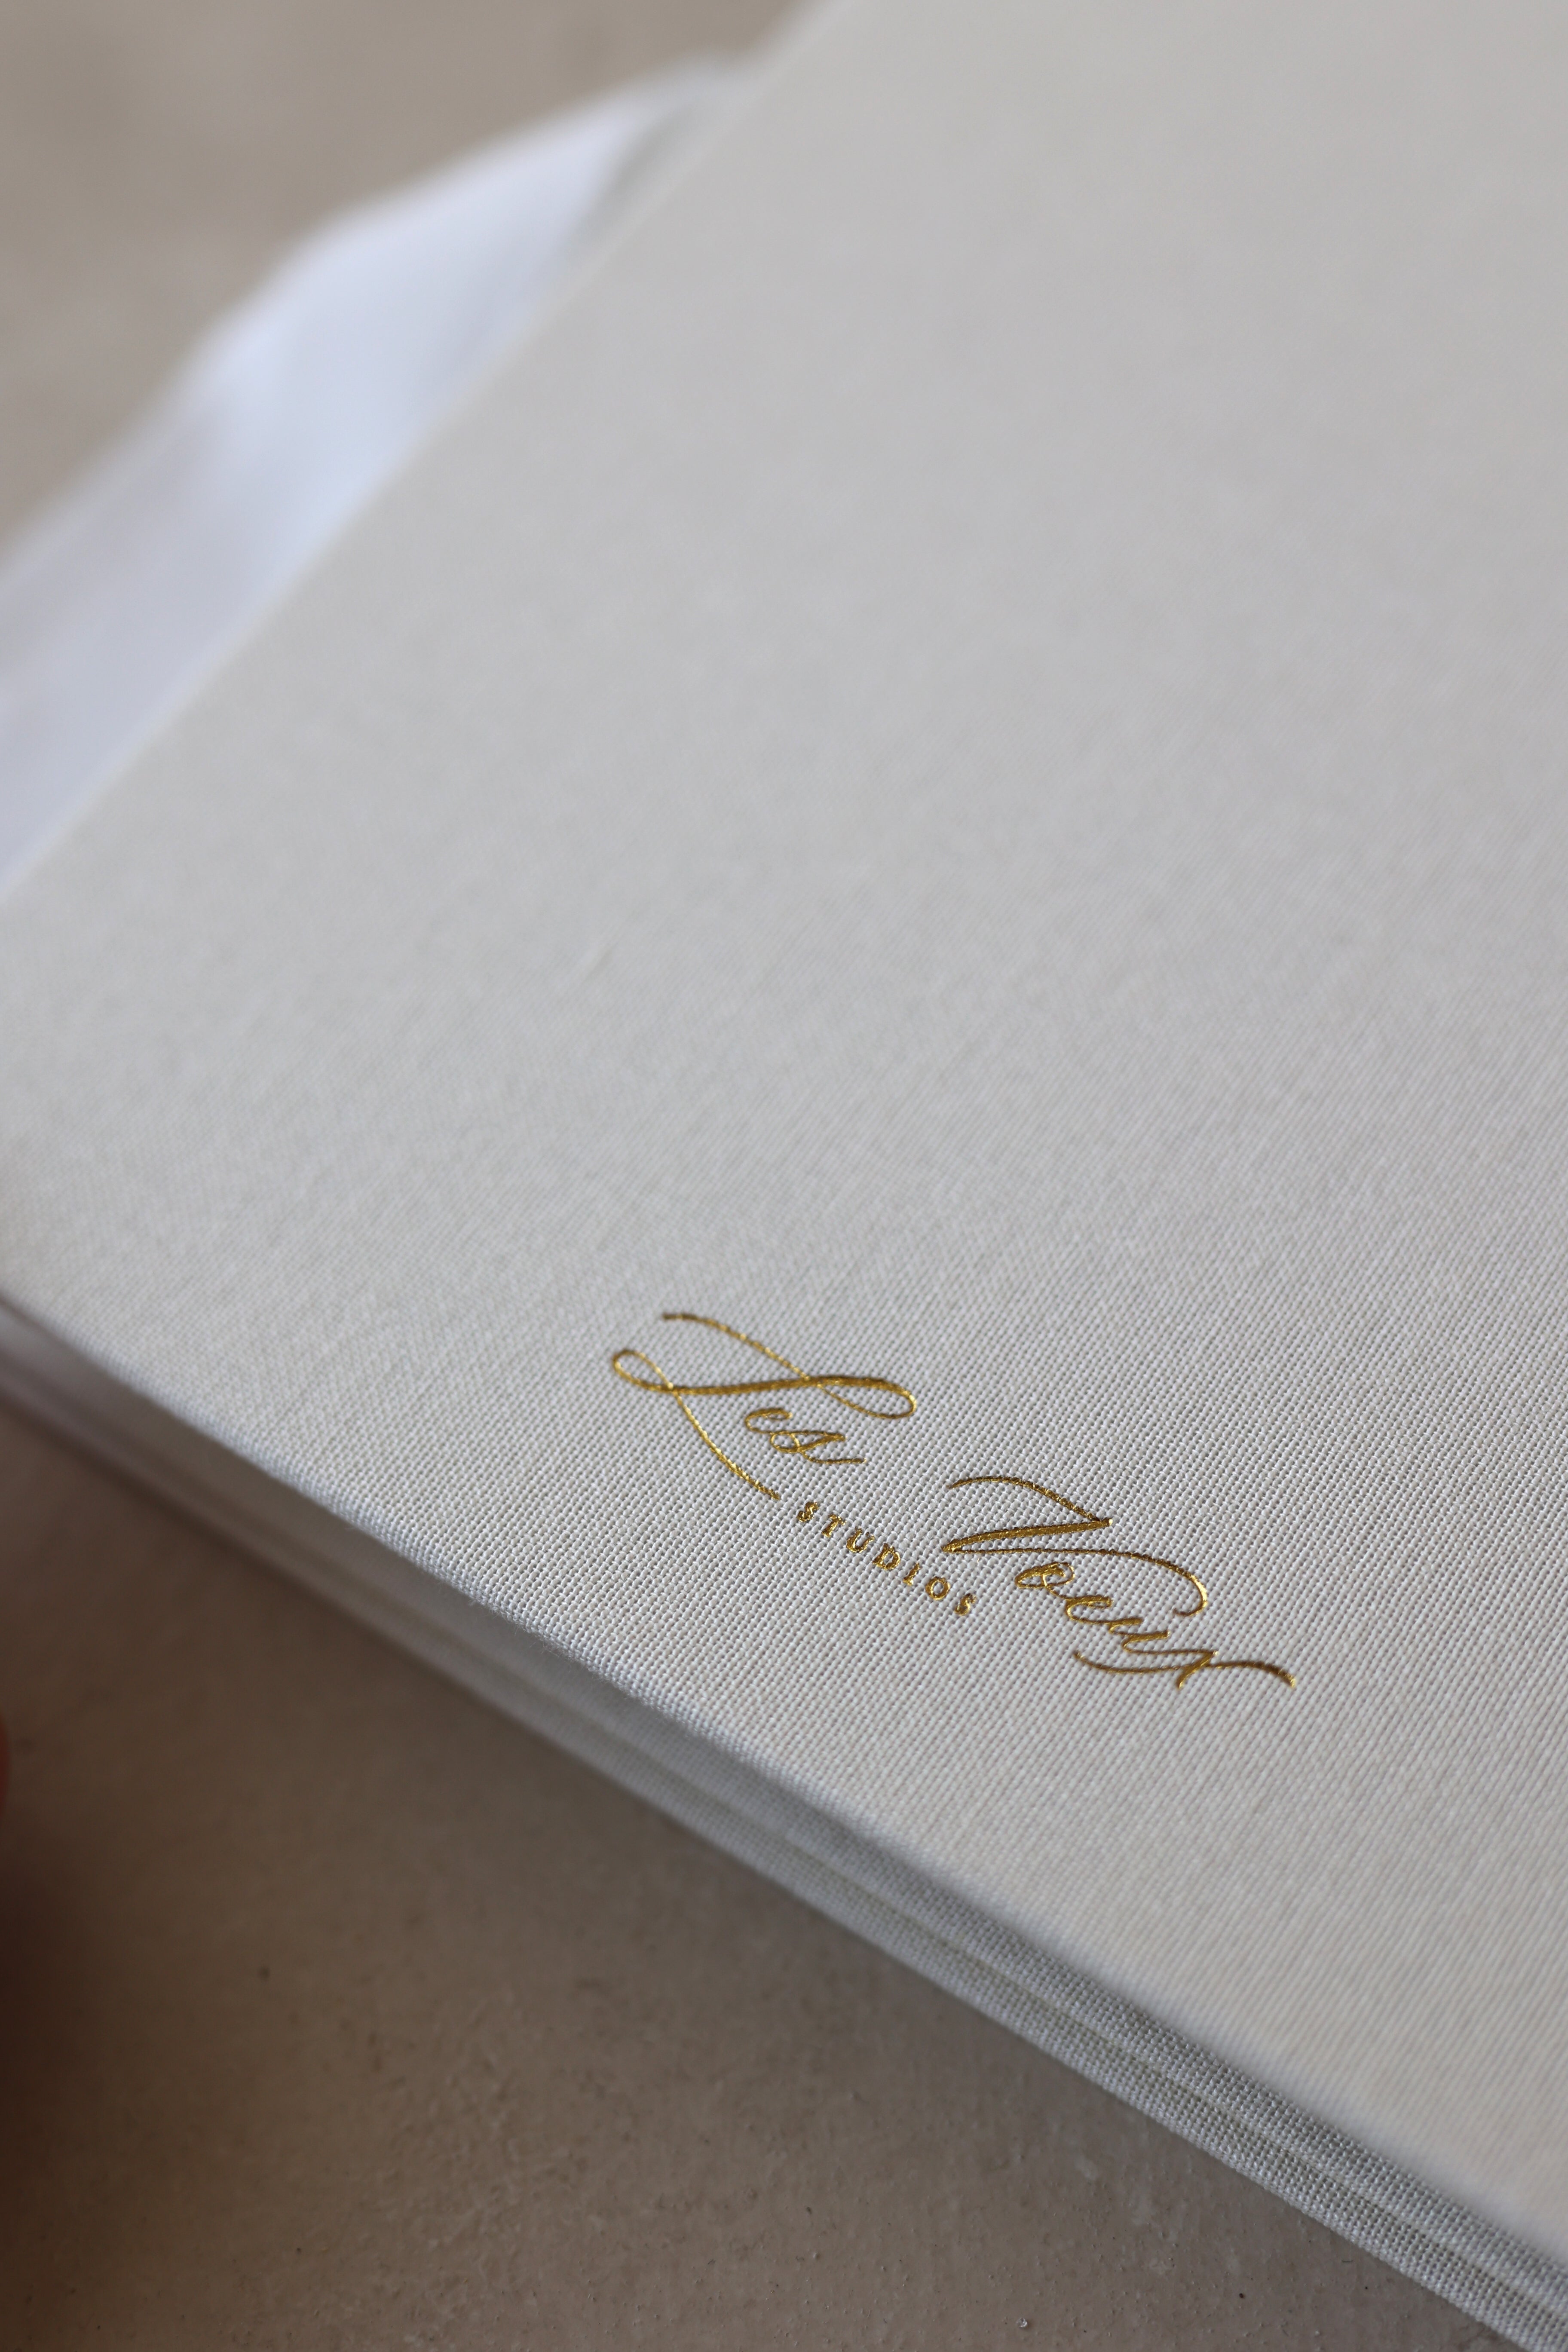 Les Voeux Studios - Handmade luxury wedding stationery – LesVoeuxStudios